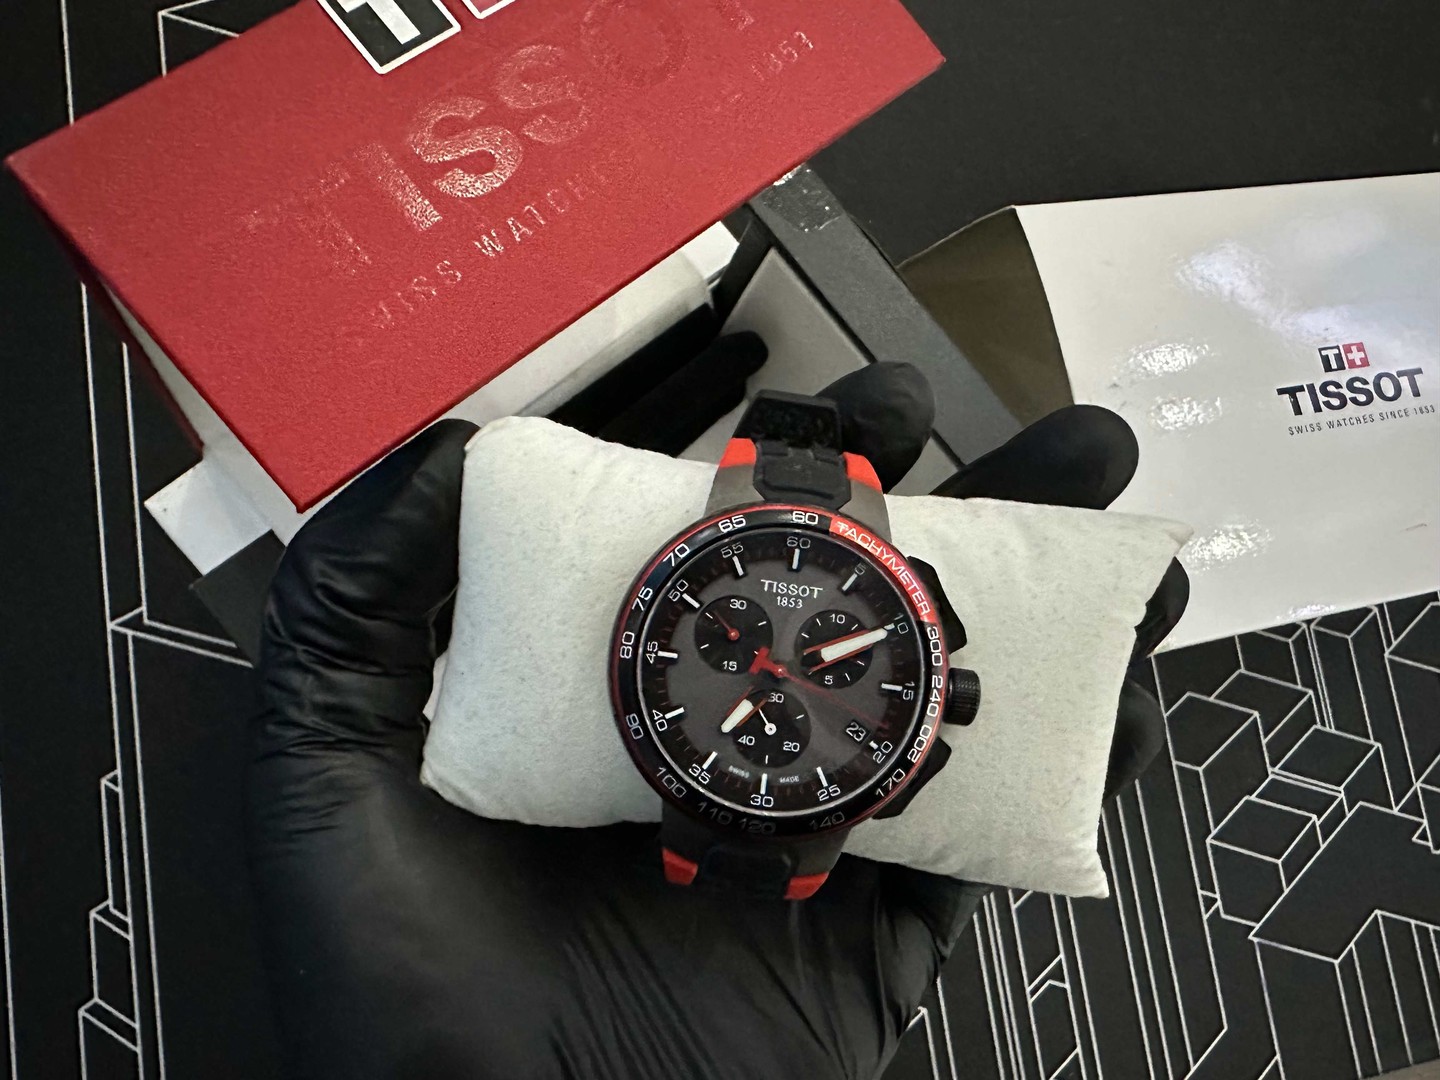 joyas, relojes y accesorios - Vendo Reloj Tissot T- Race Cycling Como Nuevo , Original RD$ 19,500 NEG